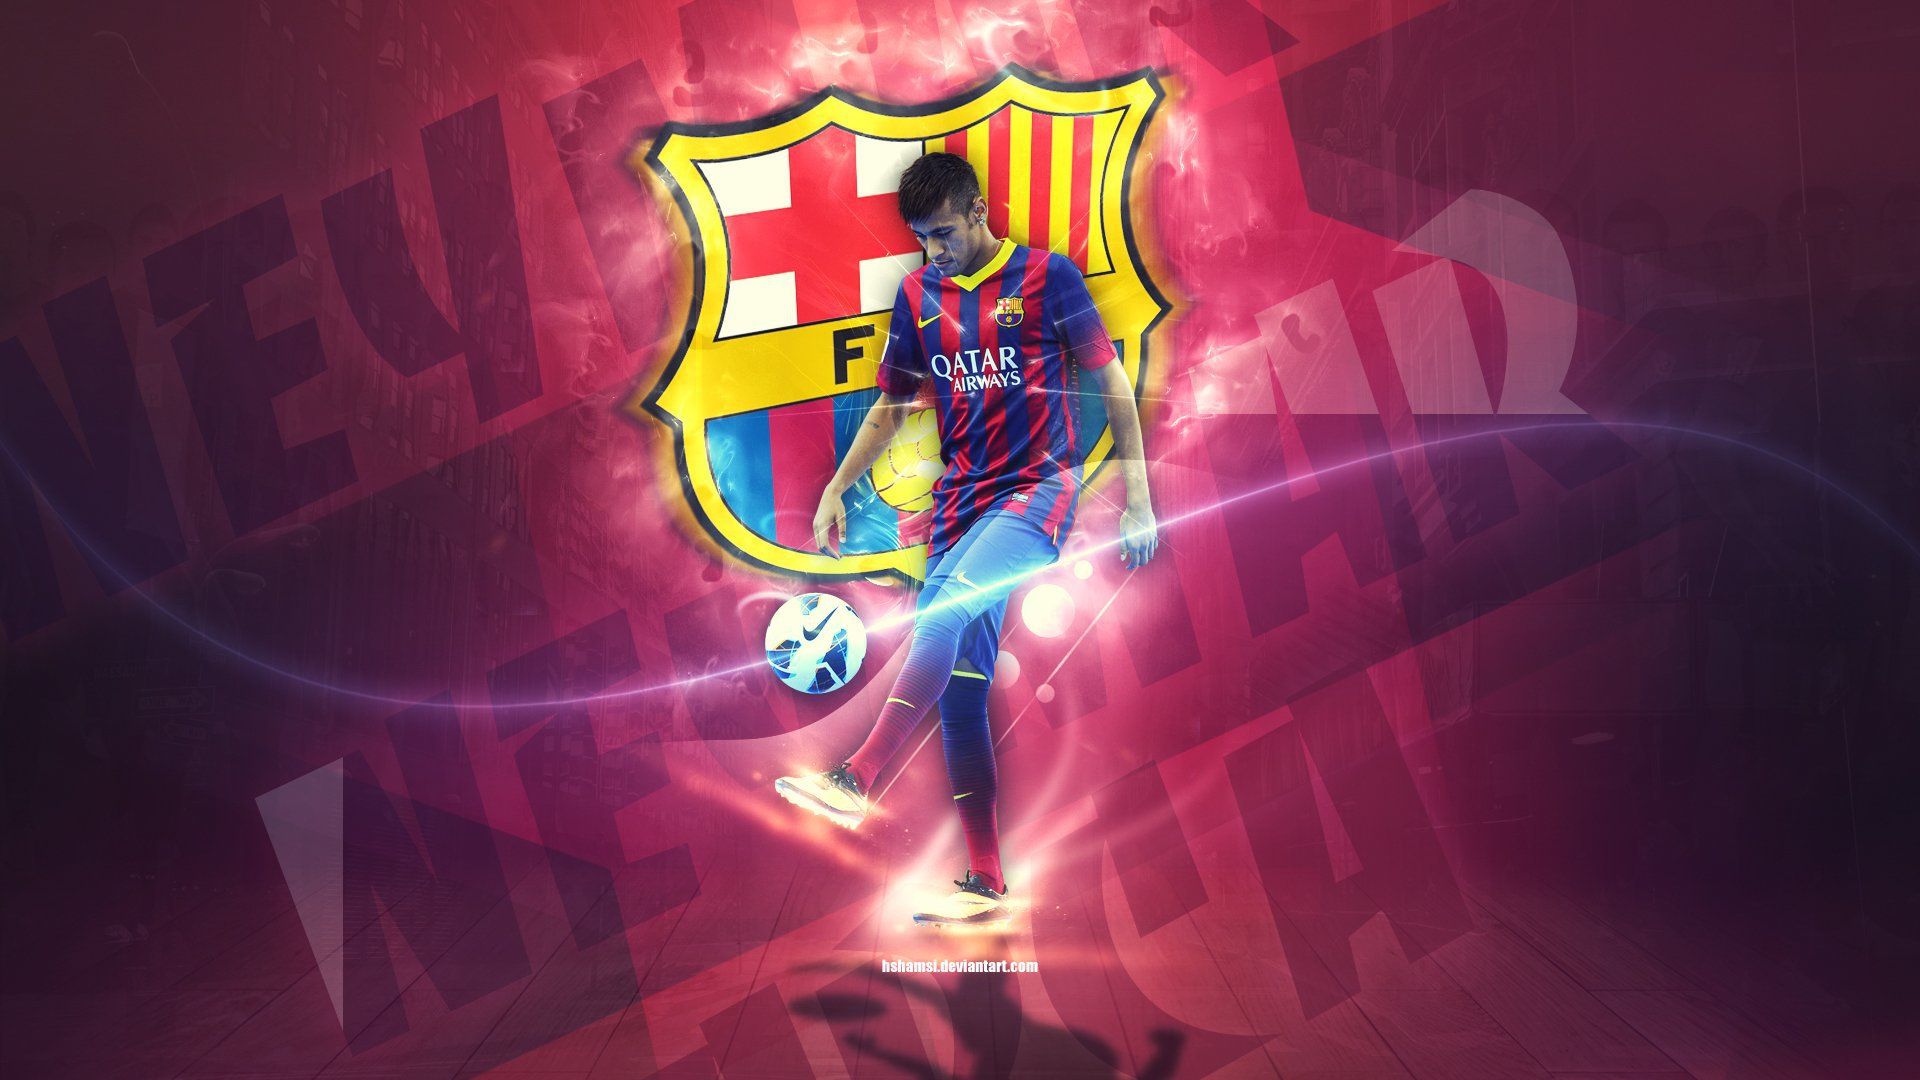 Neymar Wallpaper Image Photo Picture Background